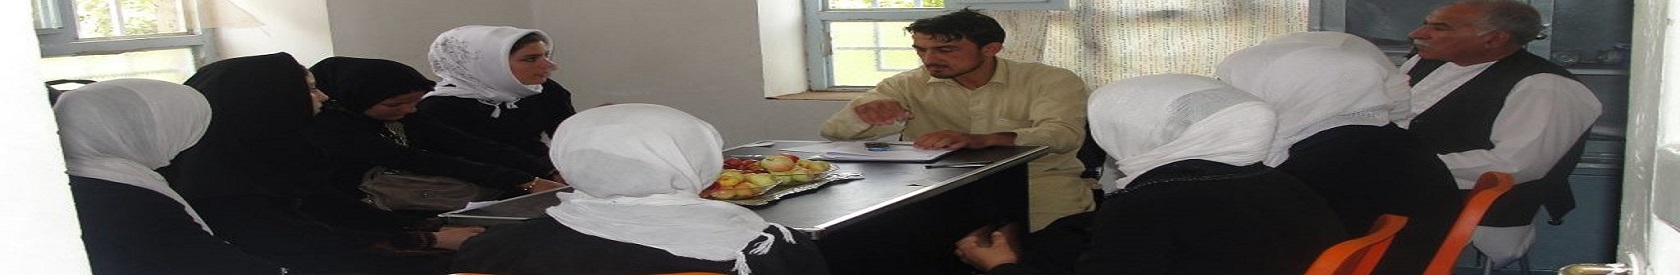 Monitoring Ghoriyan and Zenda Jan Training Centers by RWDOA staff